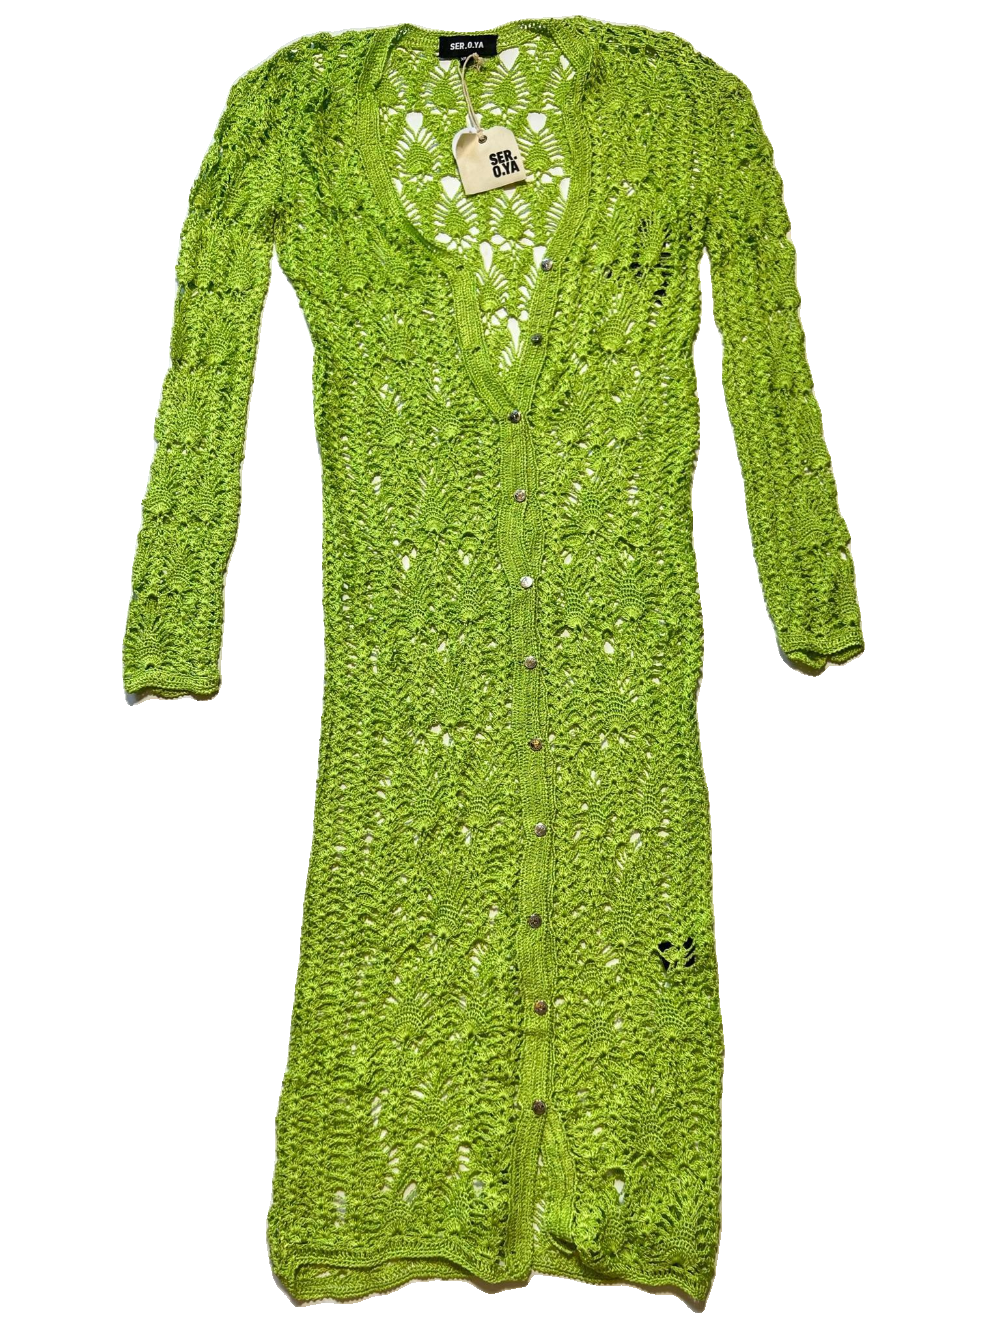 SER.O.YA - Lime Green Crochet Cardigan - NEW WITH TAGS